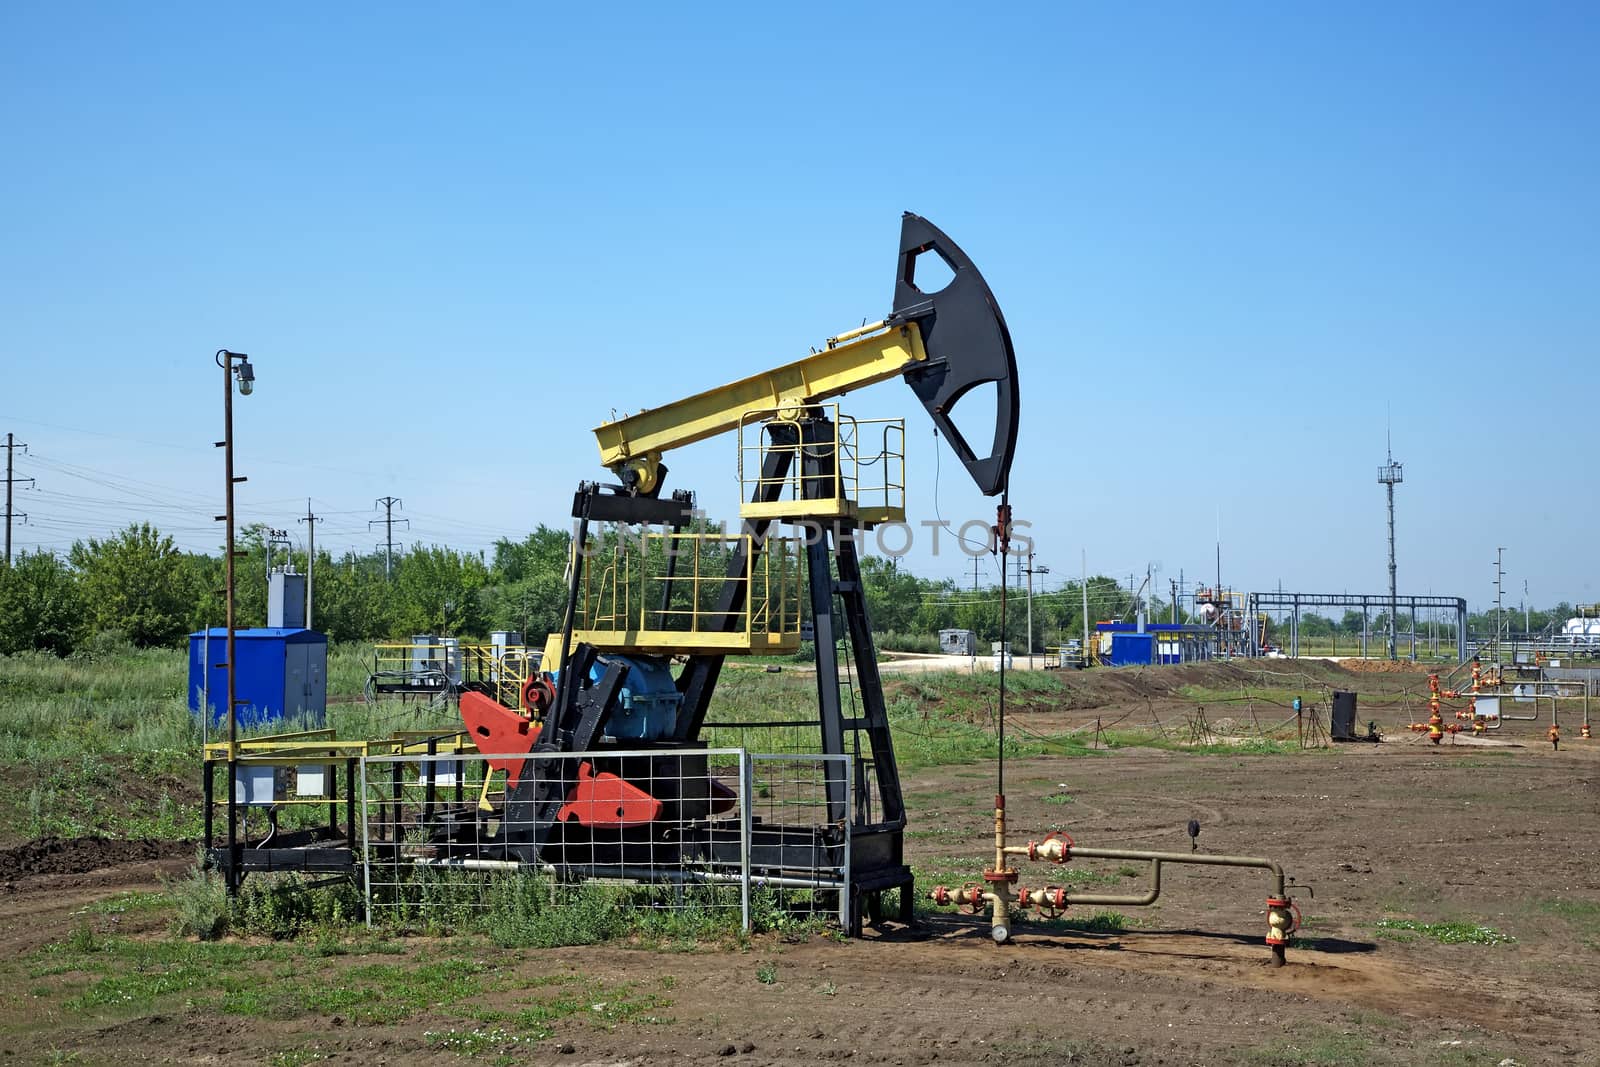 Oil pump. Oil industry equipment. by sergasx